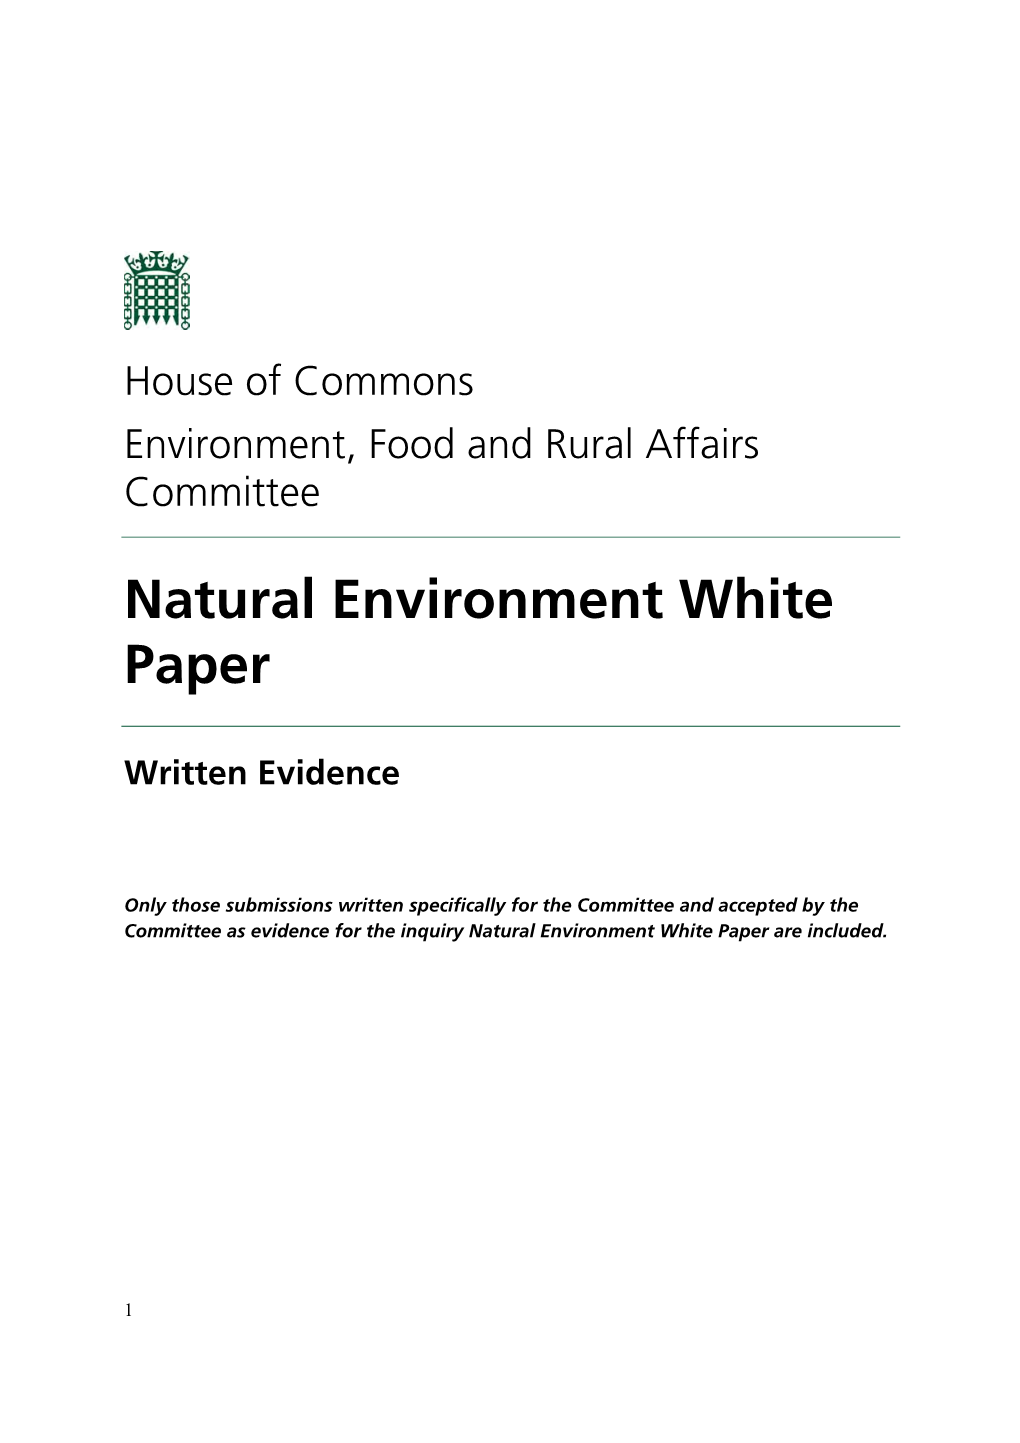 Natural Environment White Paper